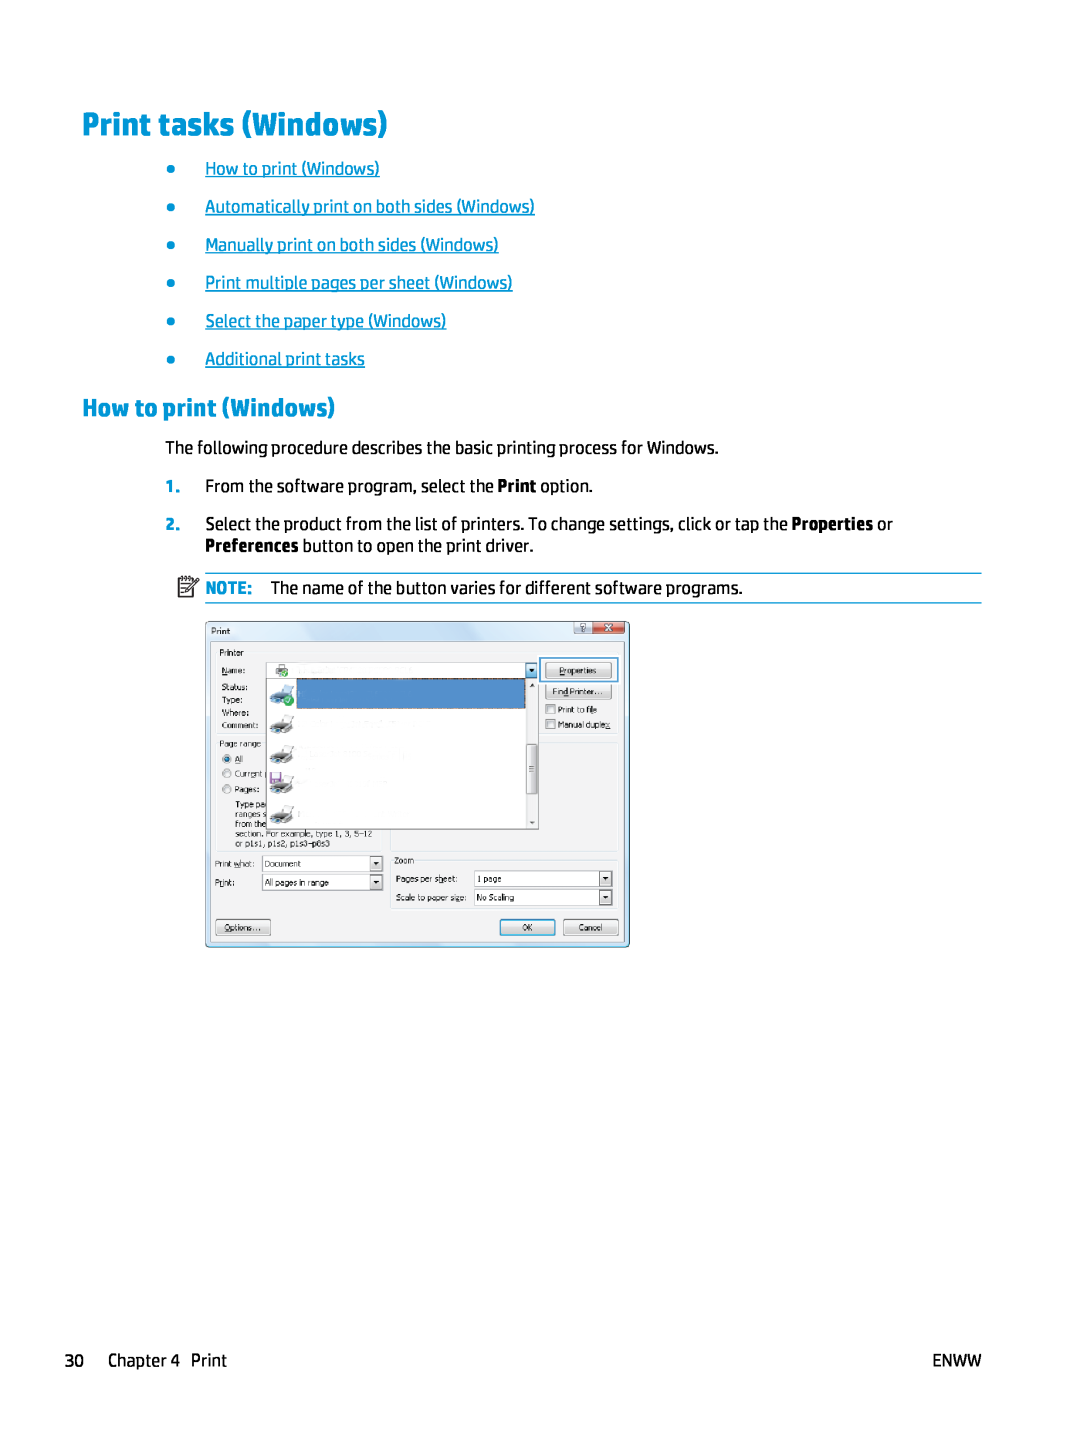 HP MFP M225dn, MFP M225dw manual Print tasks Windows, How to print Windows Automatically print on both sides Windows 